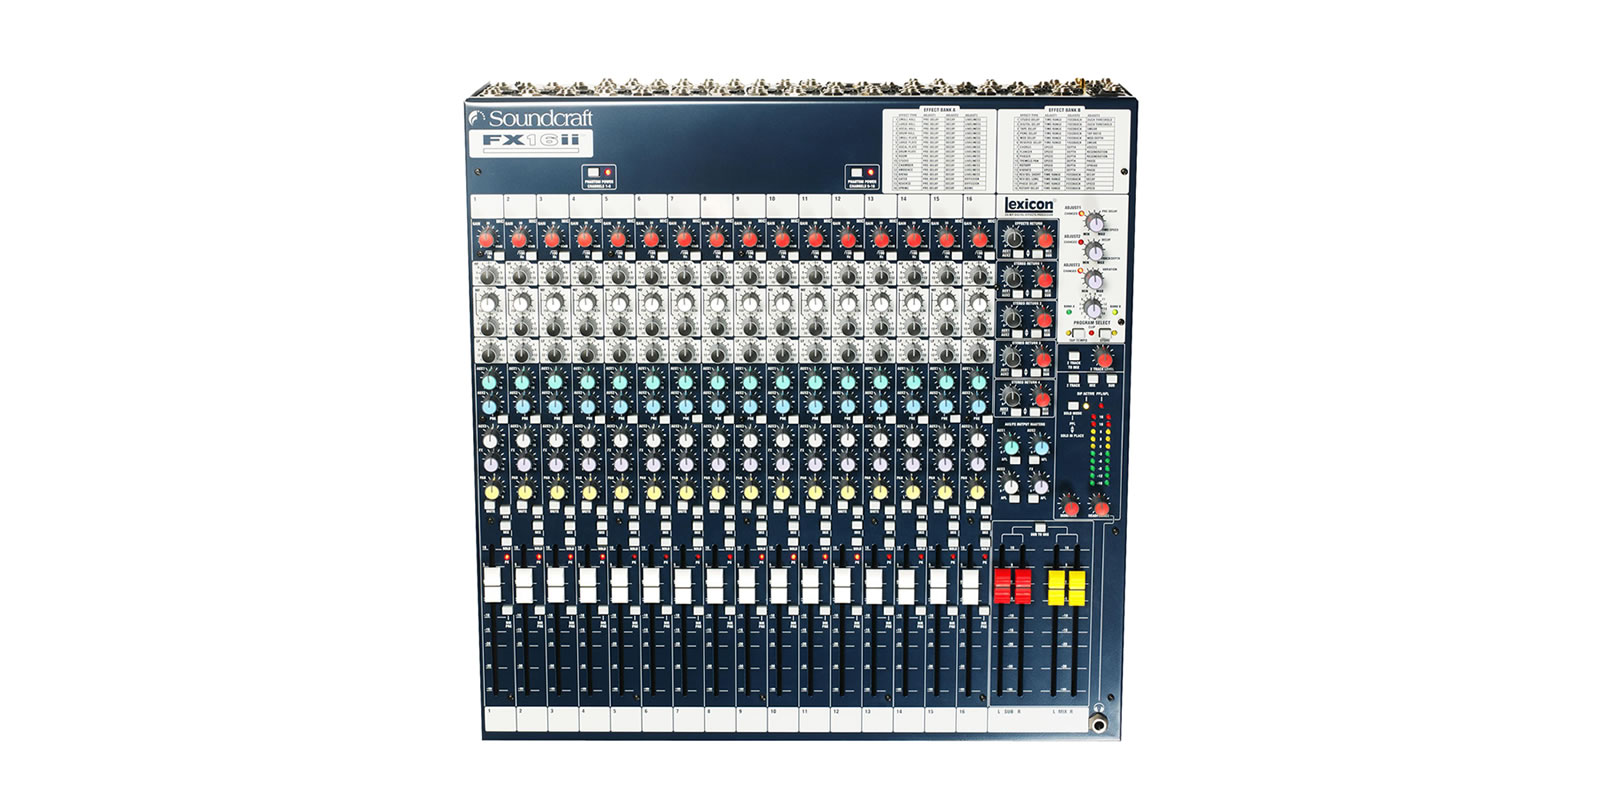 Used audio mixer for sale in nigeria